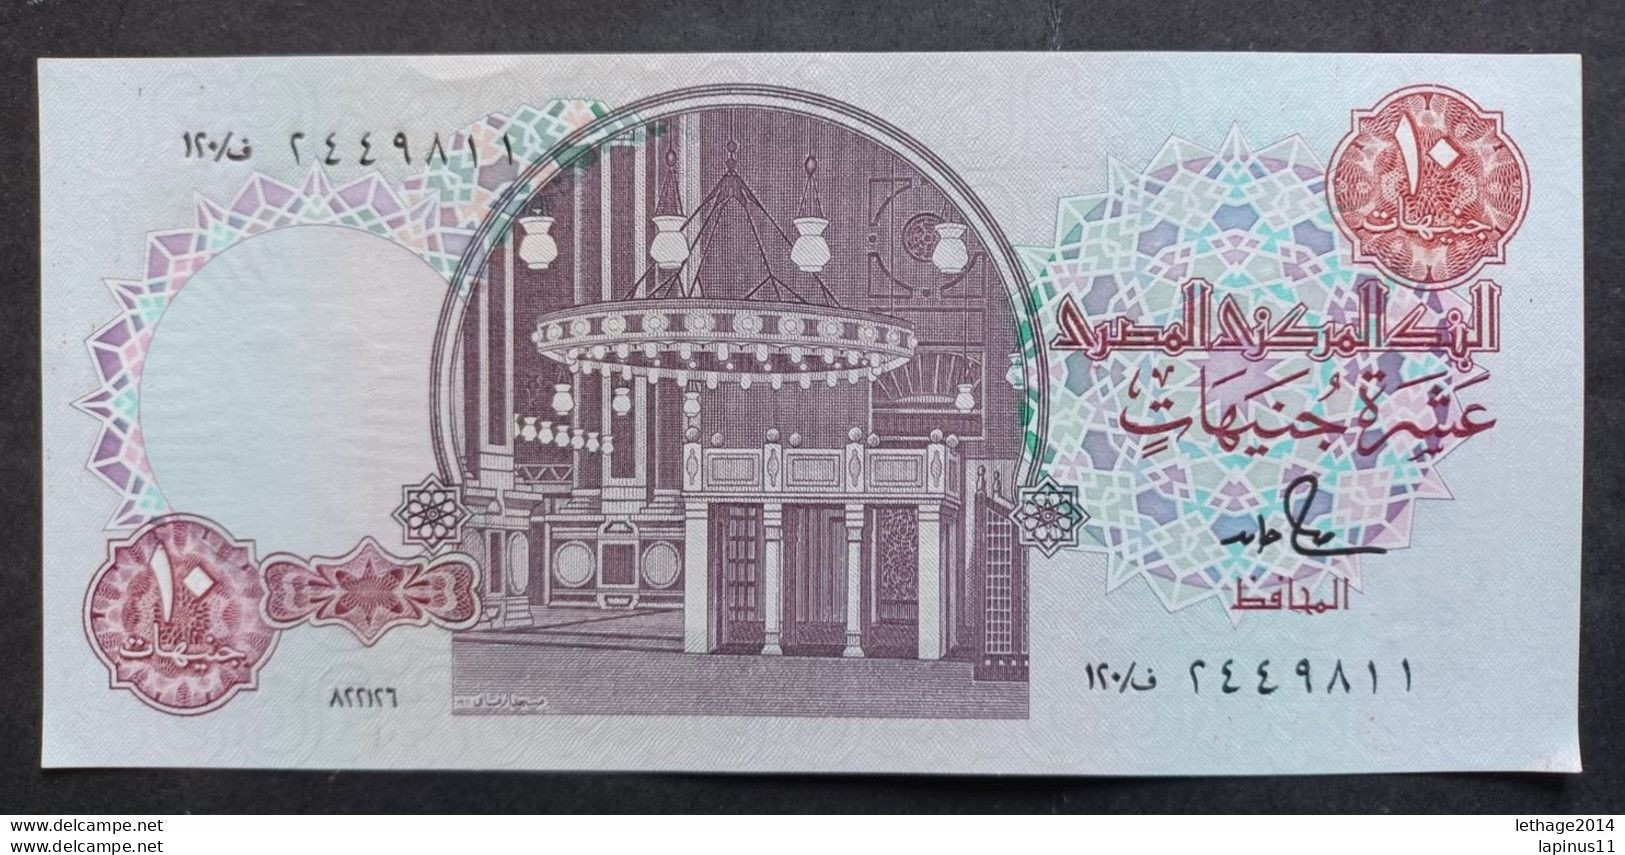 BANKNOTE SAUDI ARABIA 10 RIYAL KING FAISAL 1984 UNCIRCOLATED - Arabie Saoudite